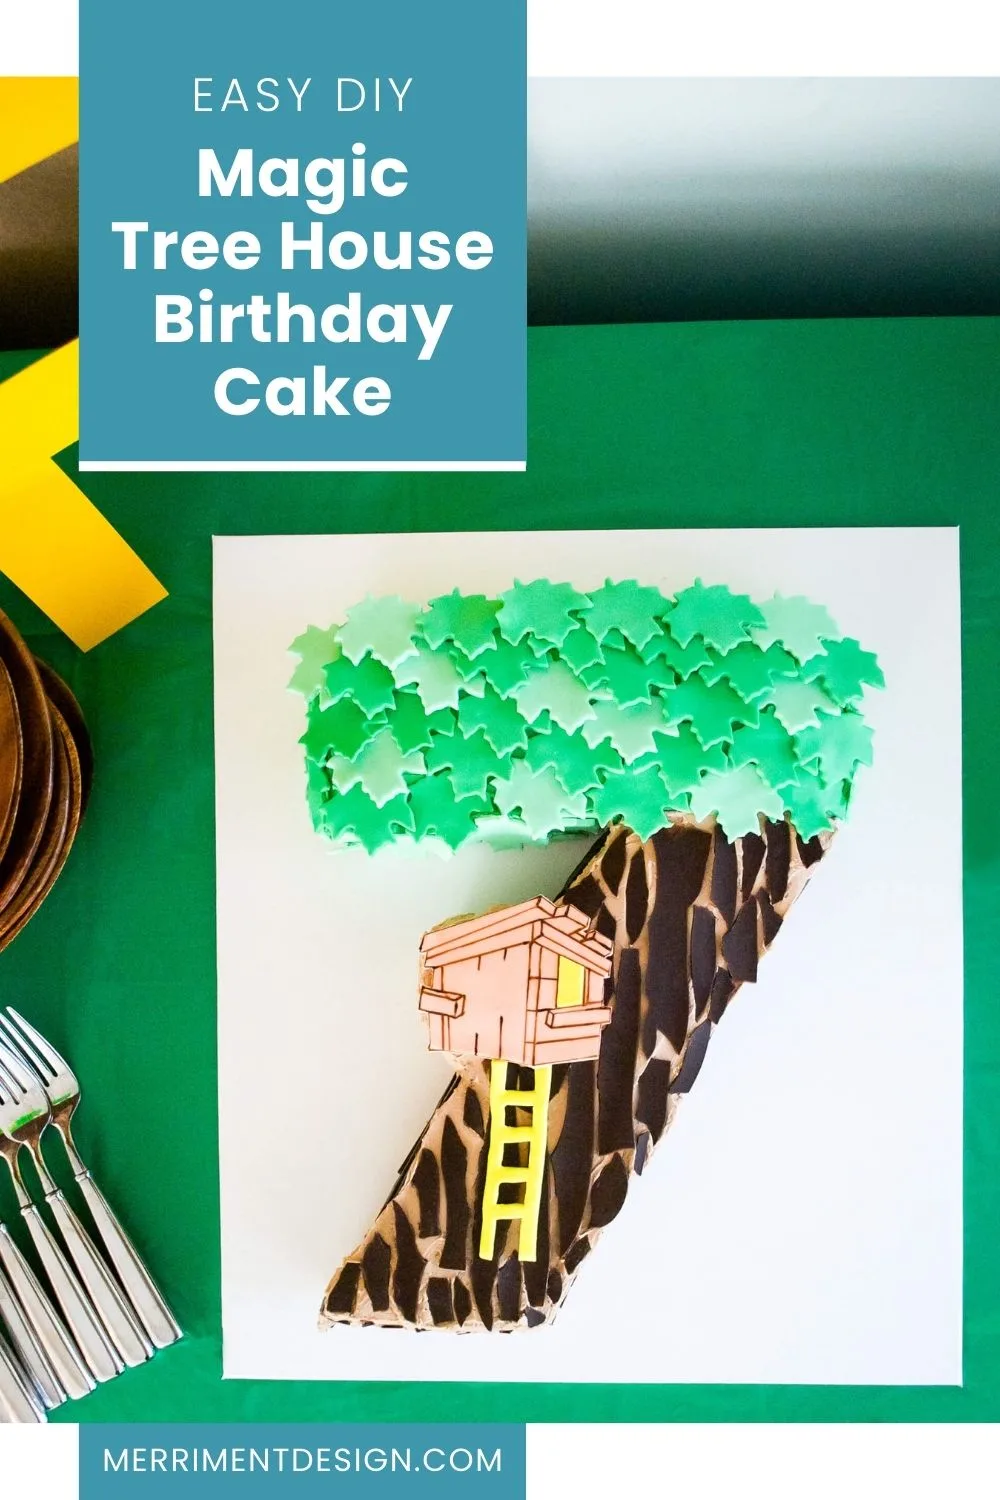 Magic Tree House birthday cake for a Magic Tree House party